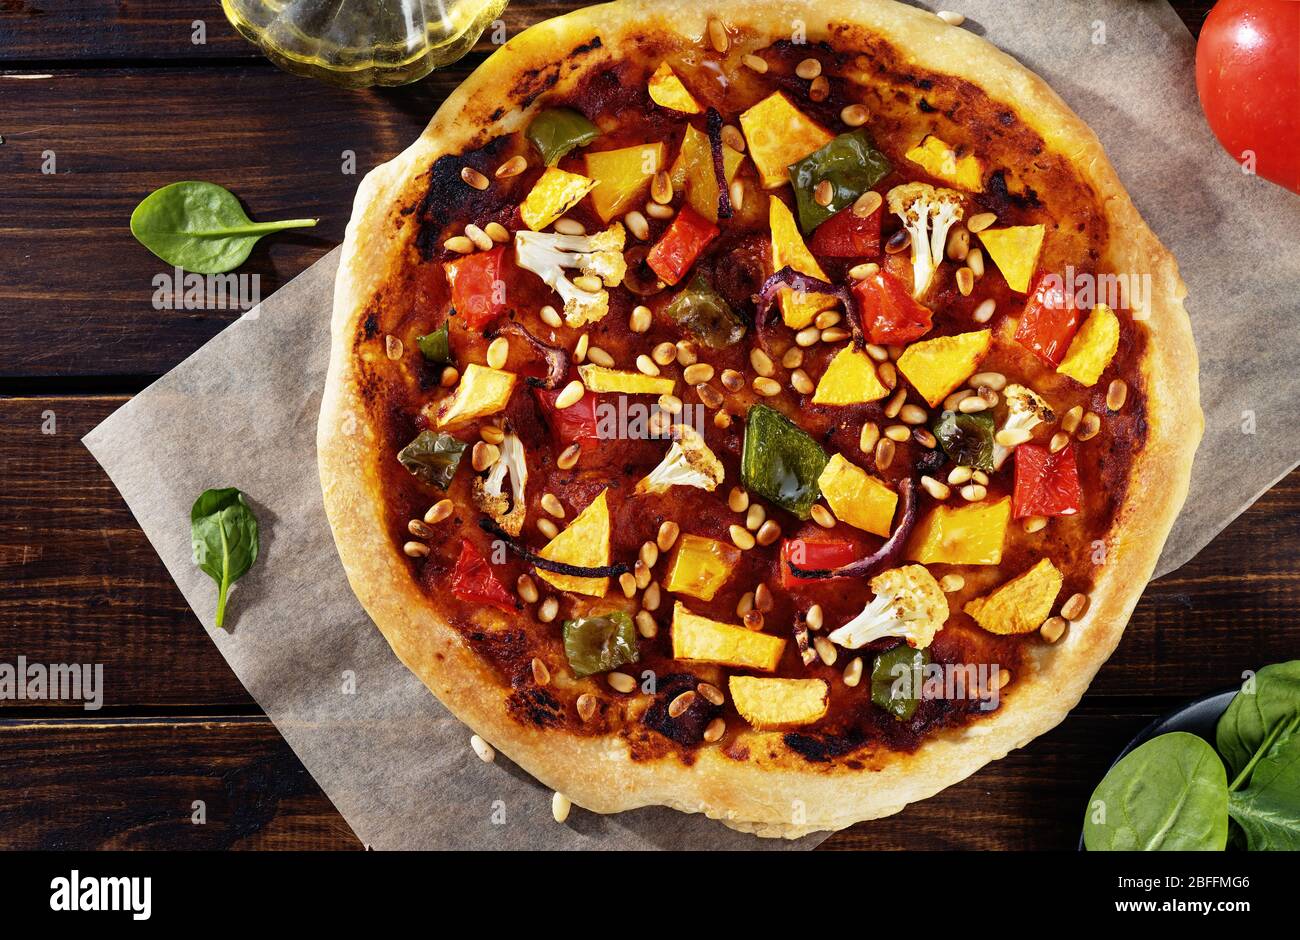 Top view of vegan vegetable pizza Stock Photo